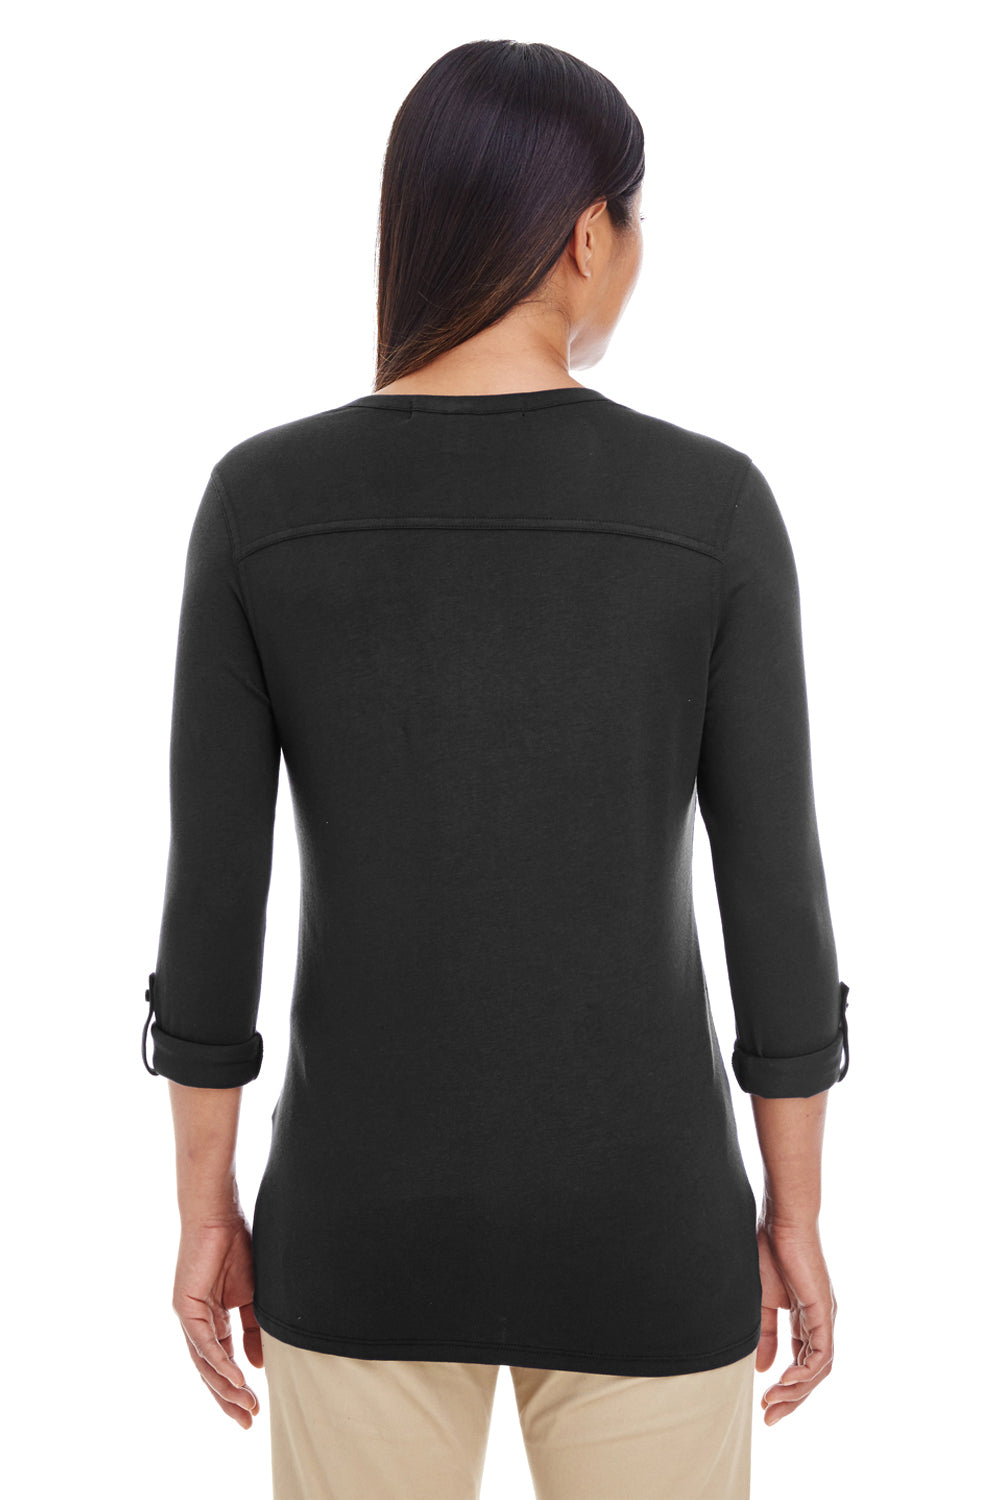 Devon & Jones DP186W Womens Perfect Fit Long Sleeve V-Neck T-Shirt Black Back